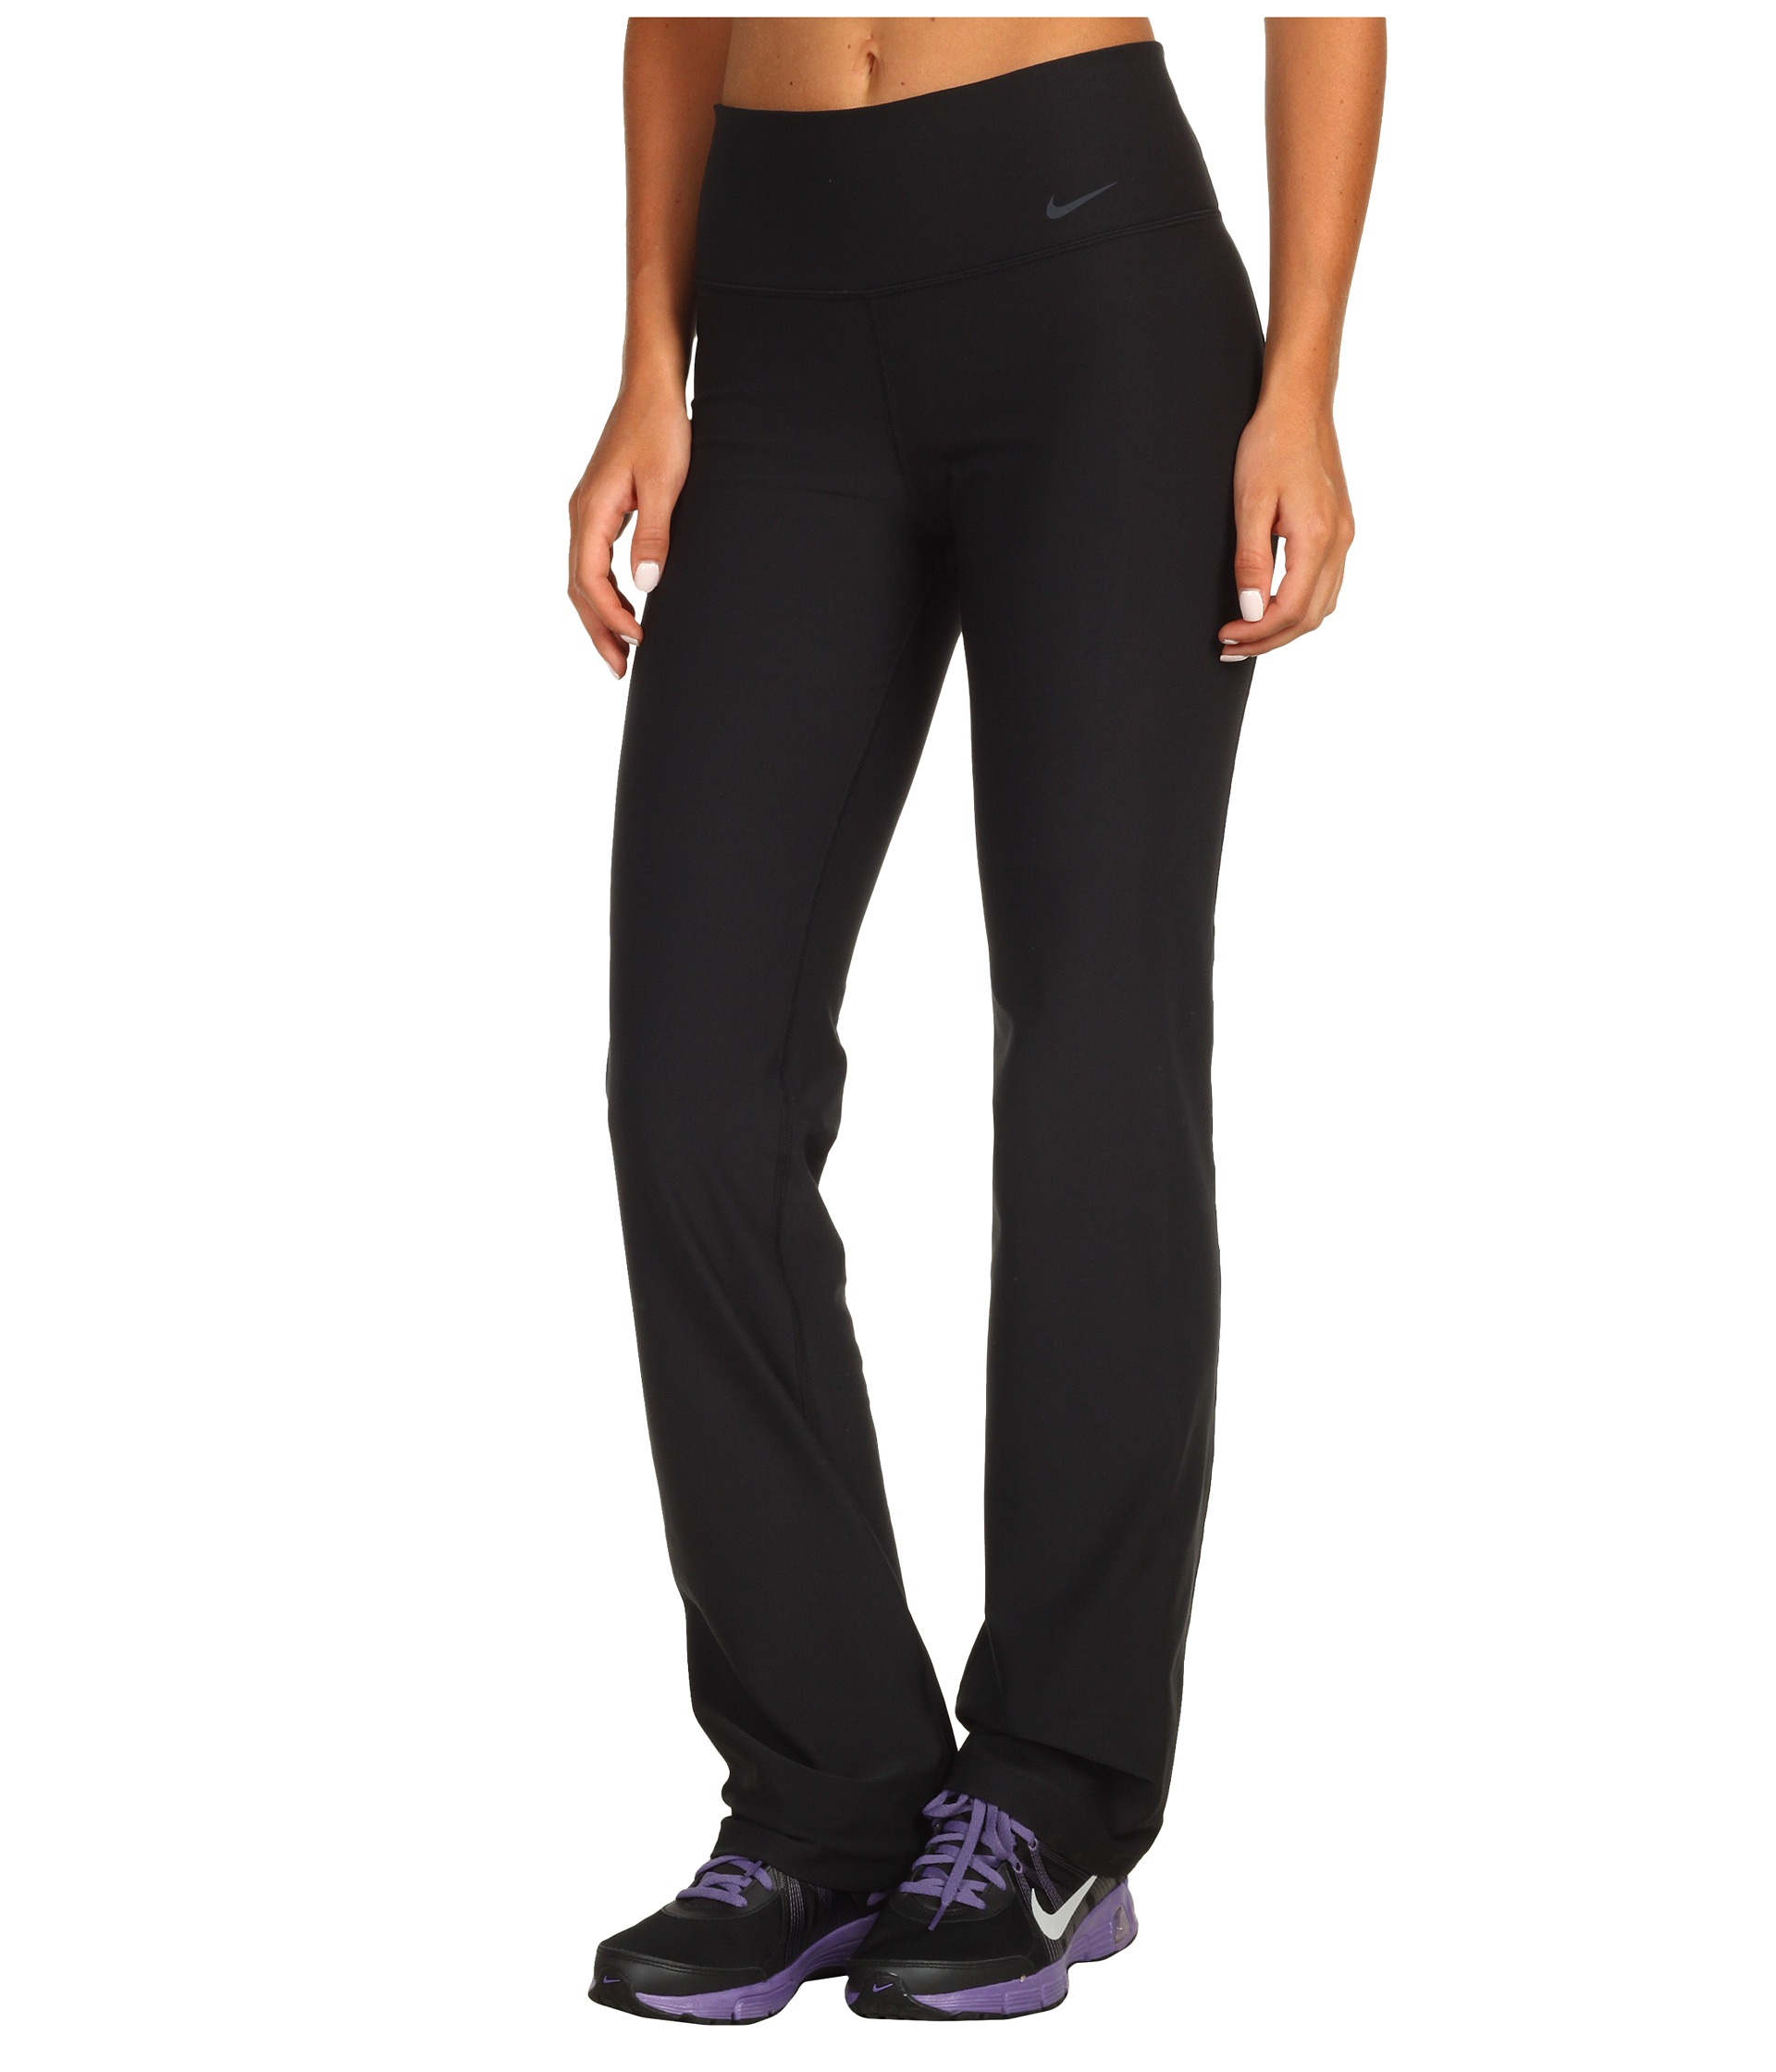 Nike Legend Skinny Fit Pants Flash Sales, UP TO 53% OFF | www.bravoplaya.com